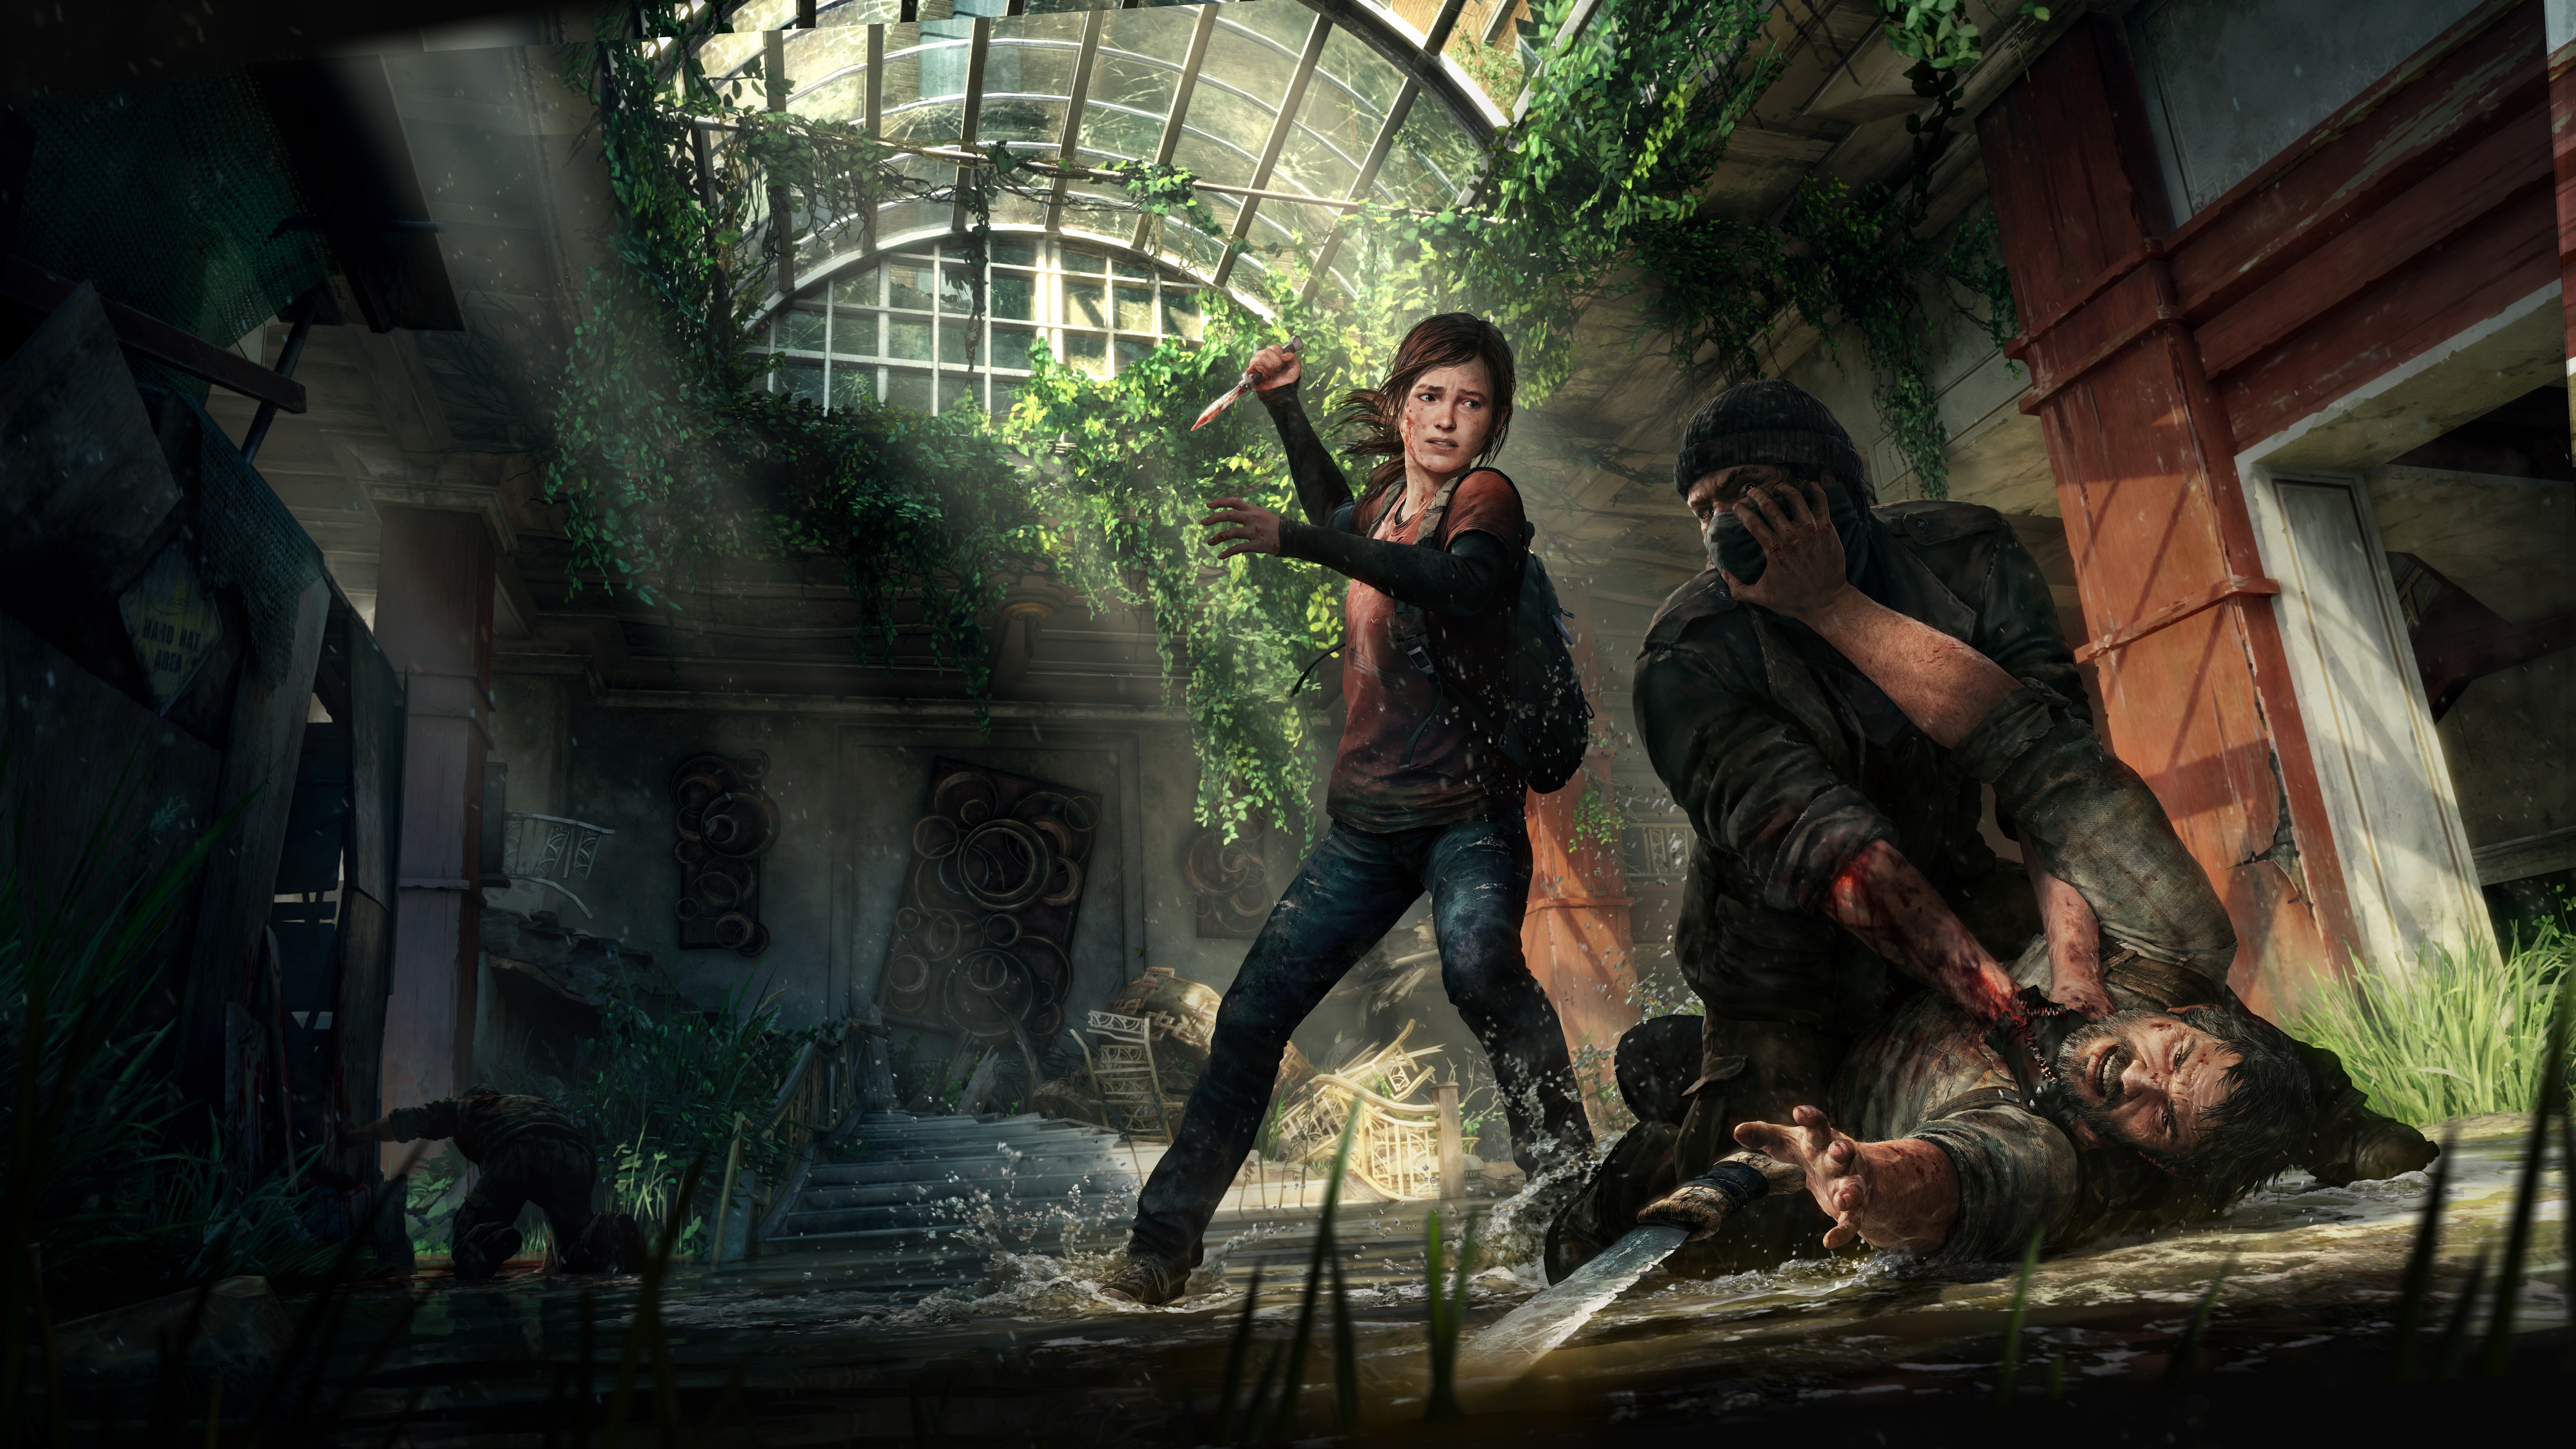 Wallpaper The Last Of Us, Ellie, Game - Fondo De Pantalla De The Last Of Us  - 7680x4320 Wallpaper 